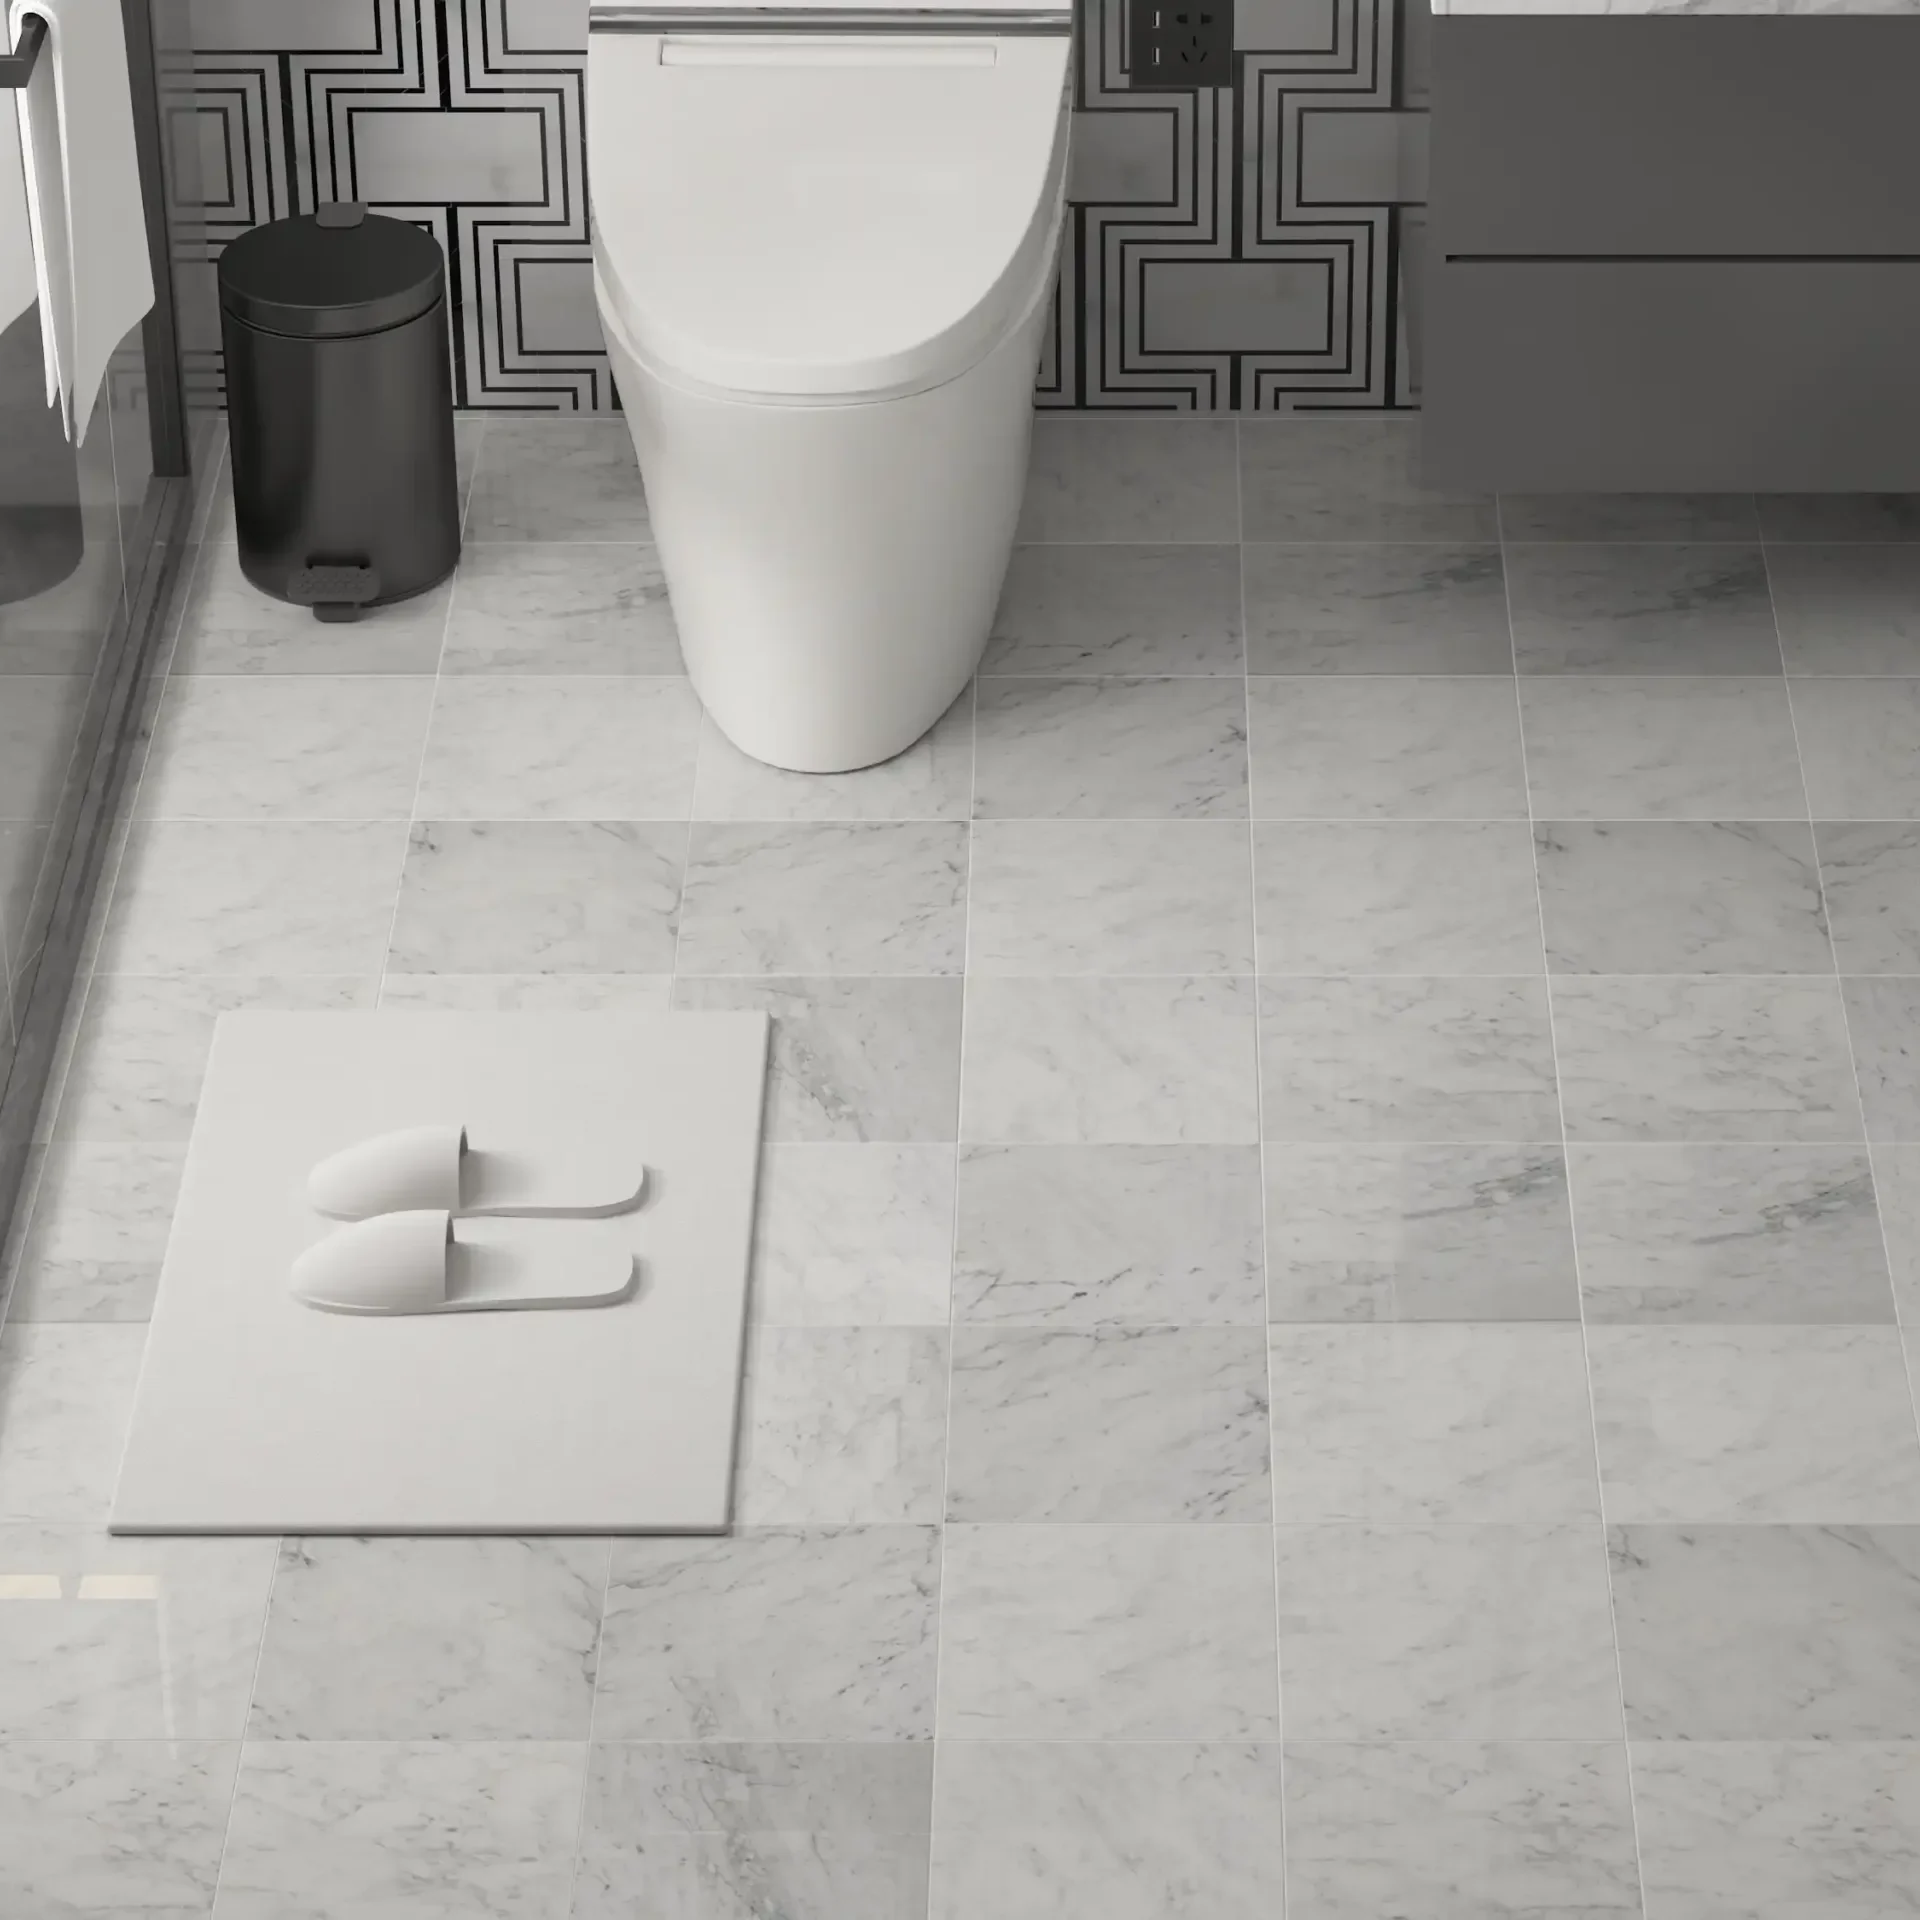 Image of bathroom floor featuring installed tiles